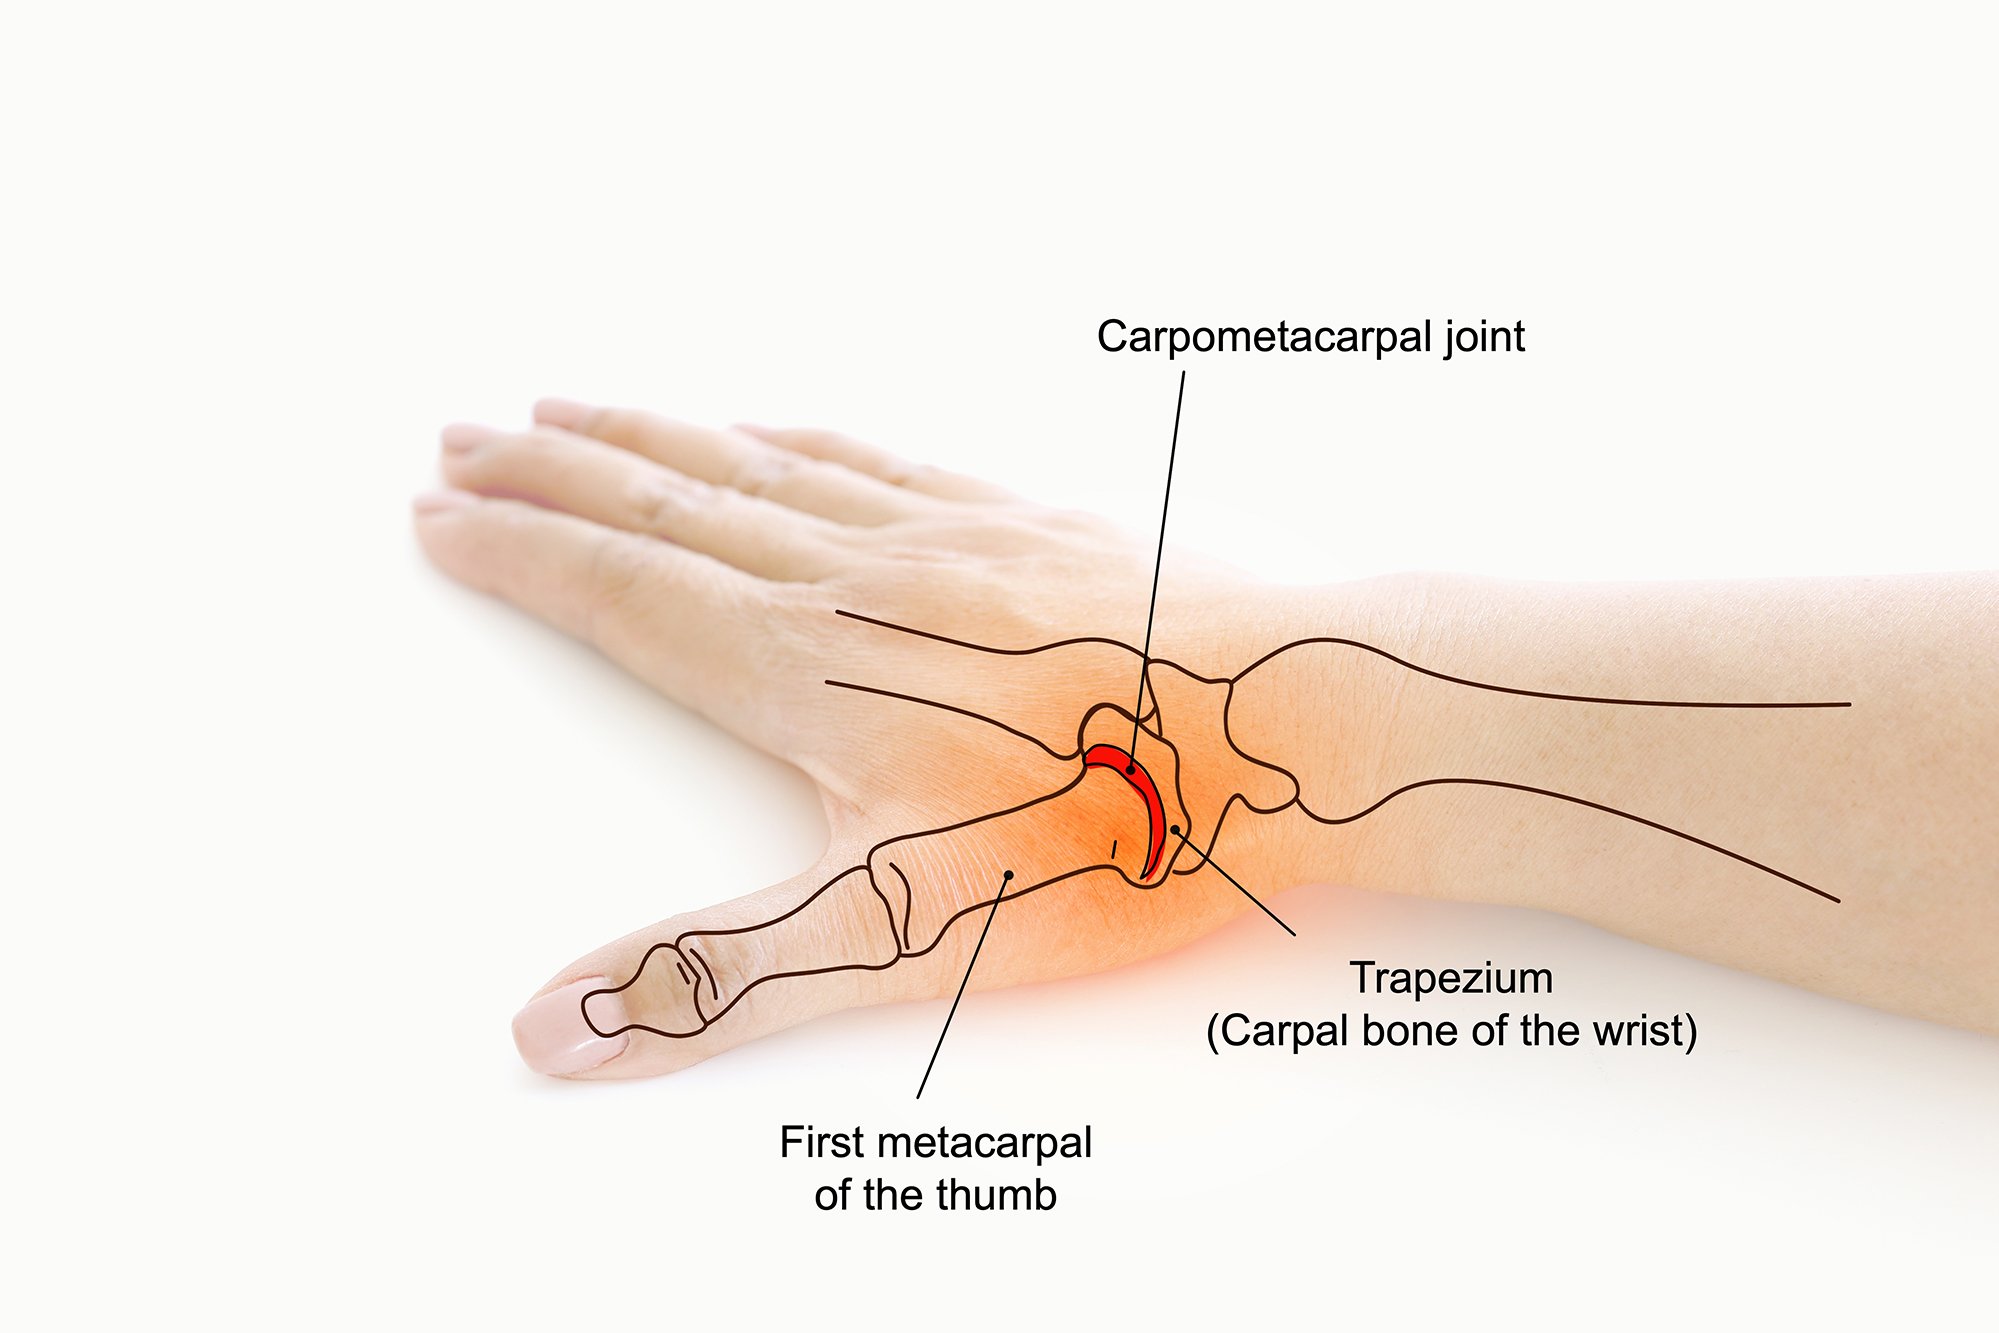 thumb arthritis